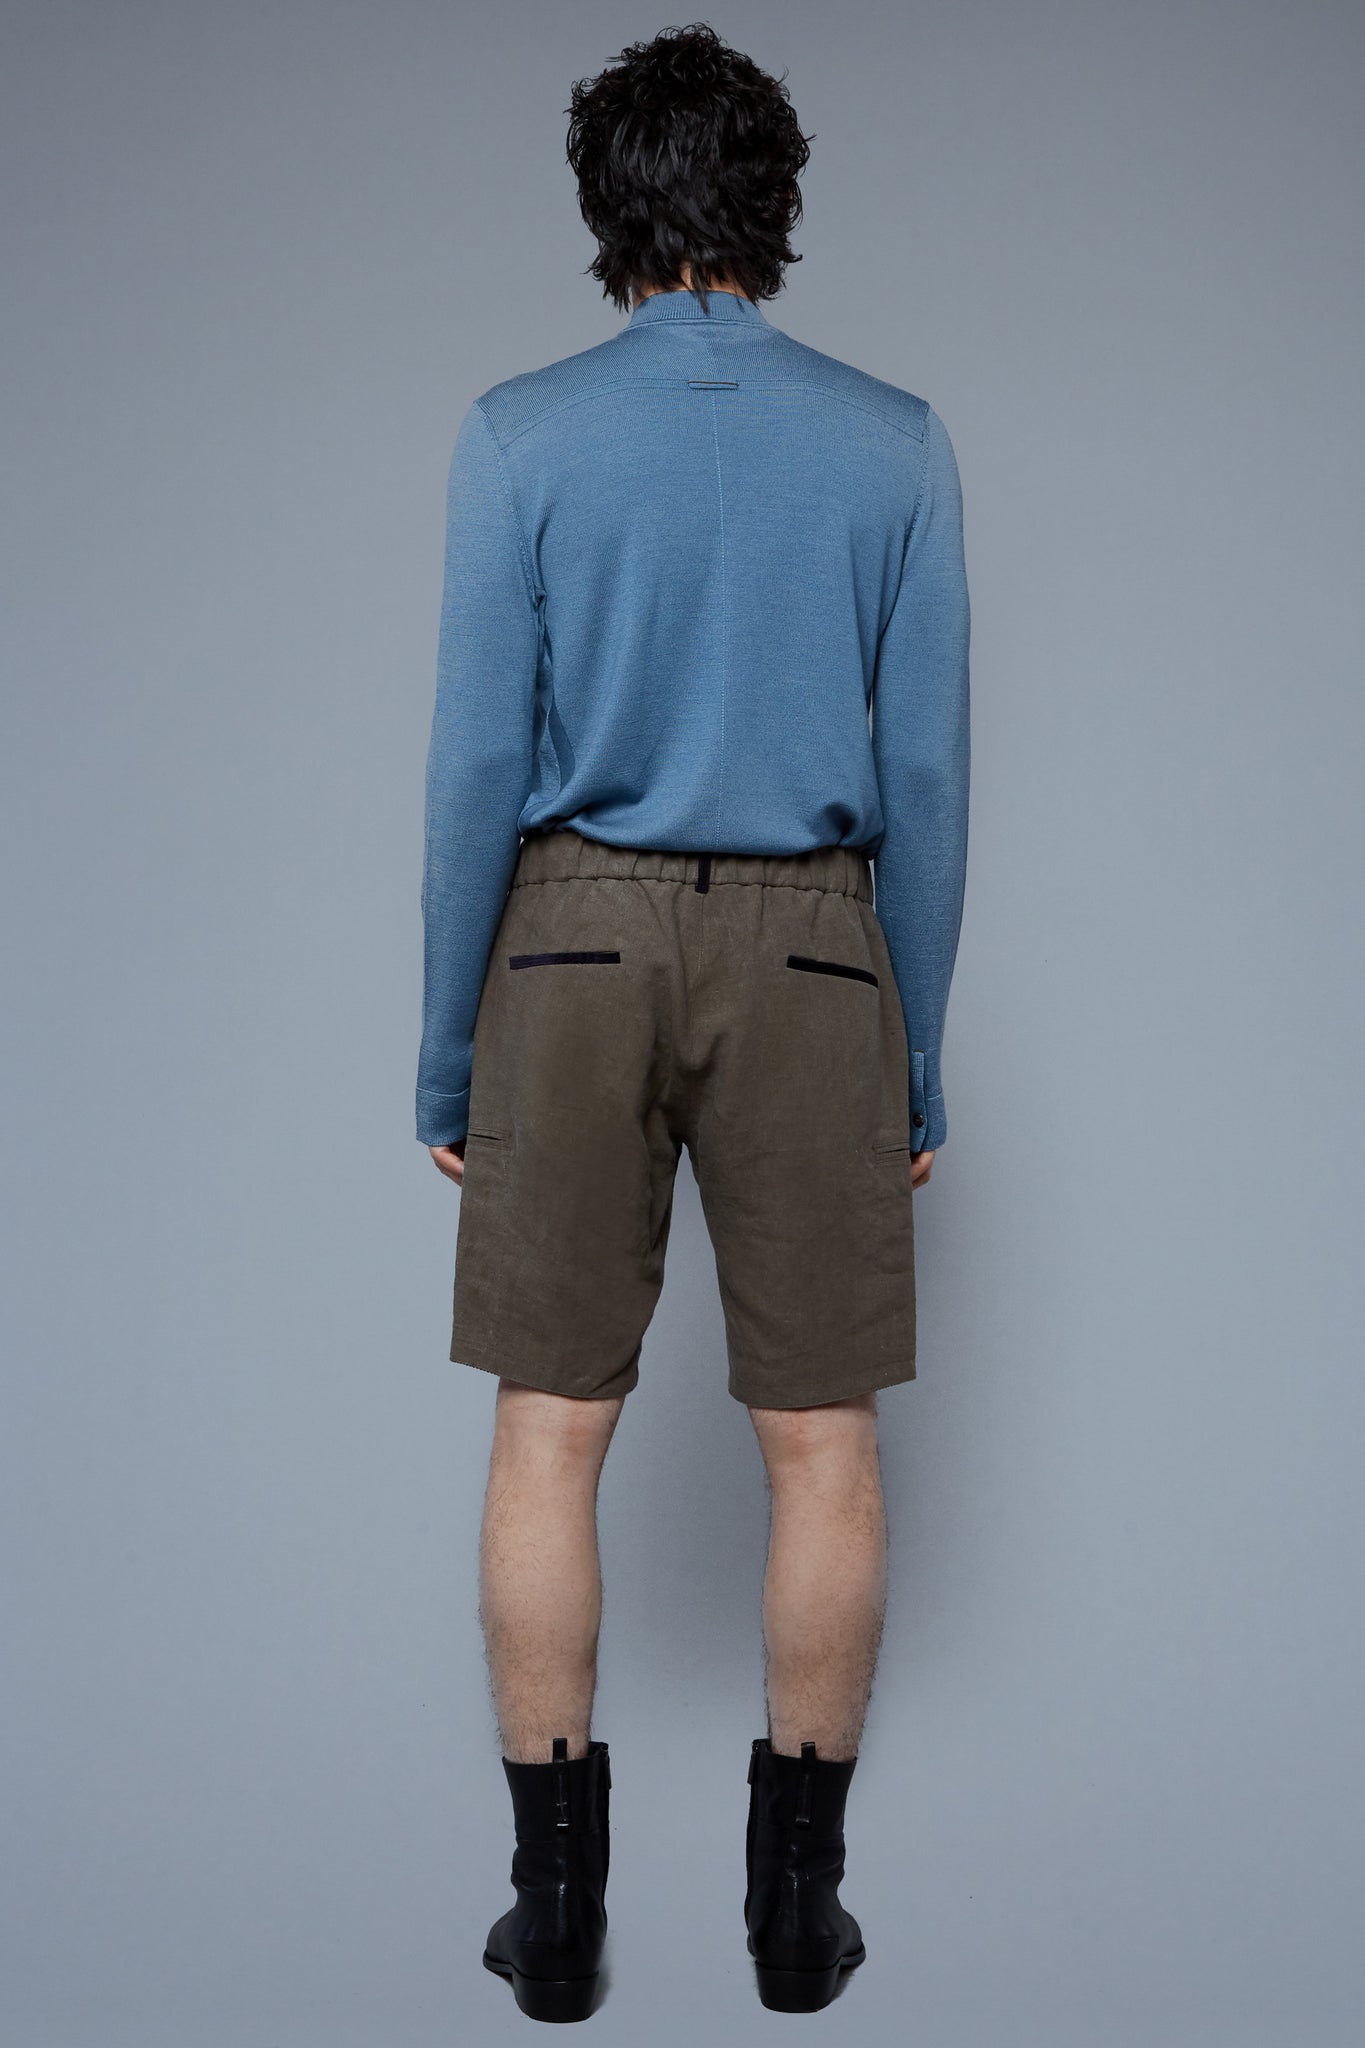 Back View: Model Asher wearing Lounge Shorts